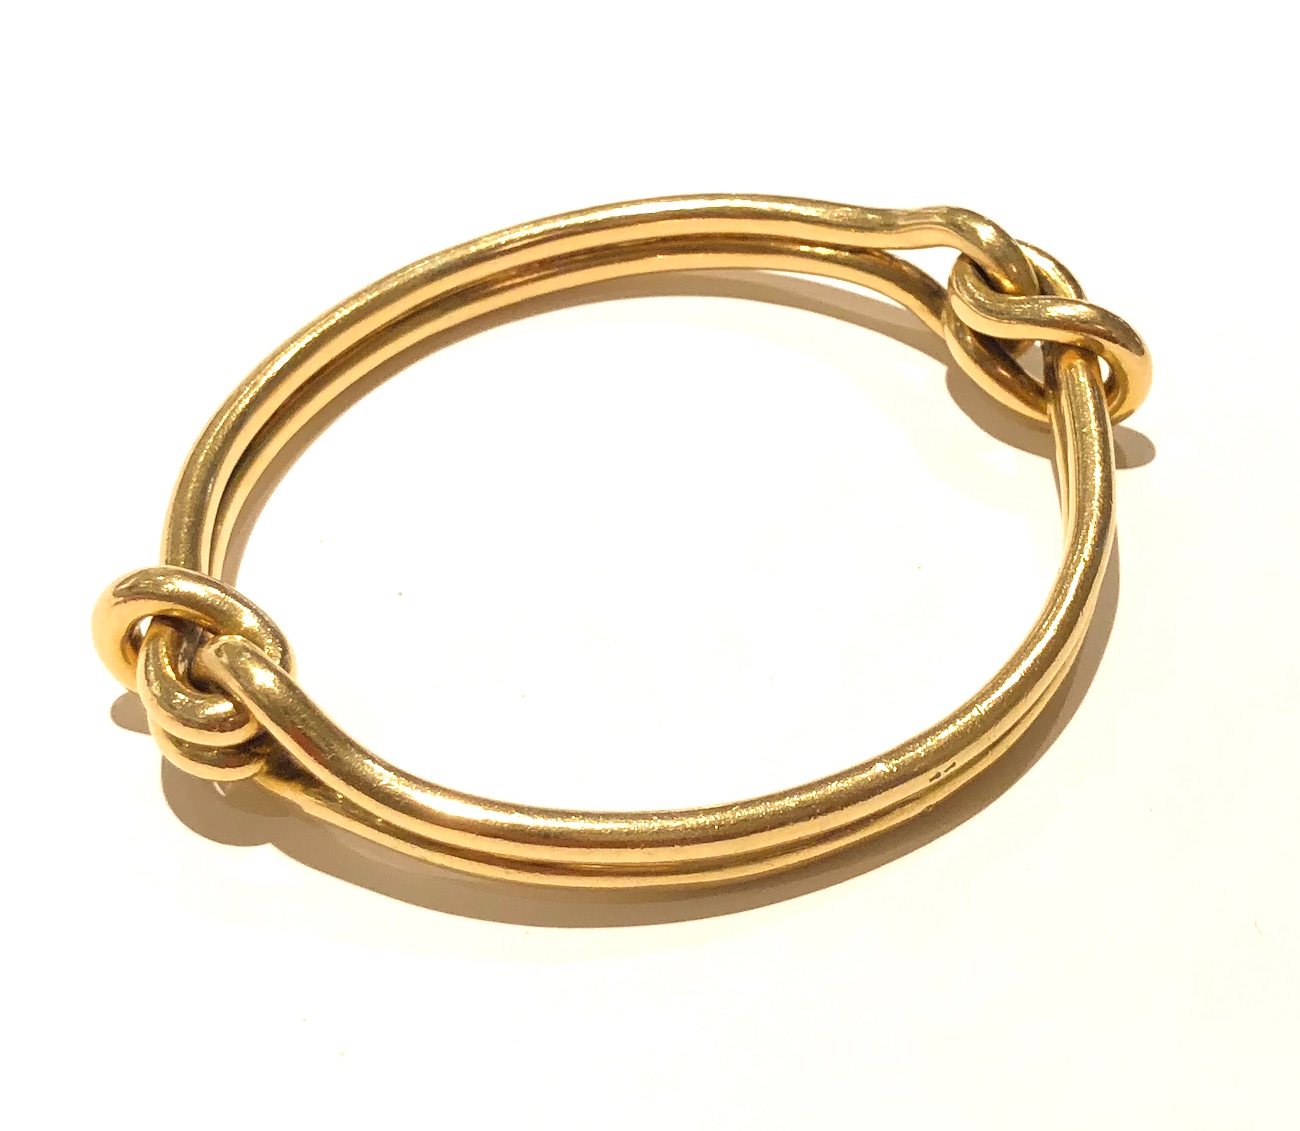 Cartier Paris 18K gold “Knot” bangle bracelet, signed: Cartier (script signature) Cartier touch mark, French Eagle’s head touch mark for 18K gold (2x), c. 1960’s